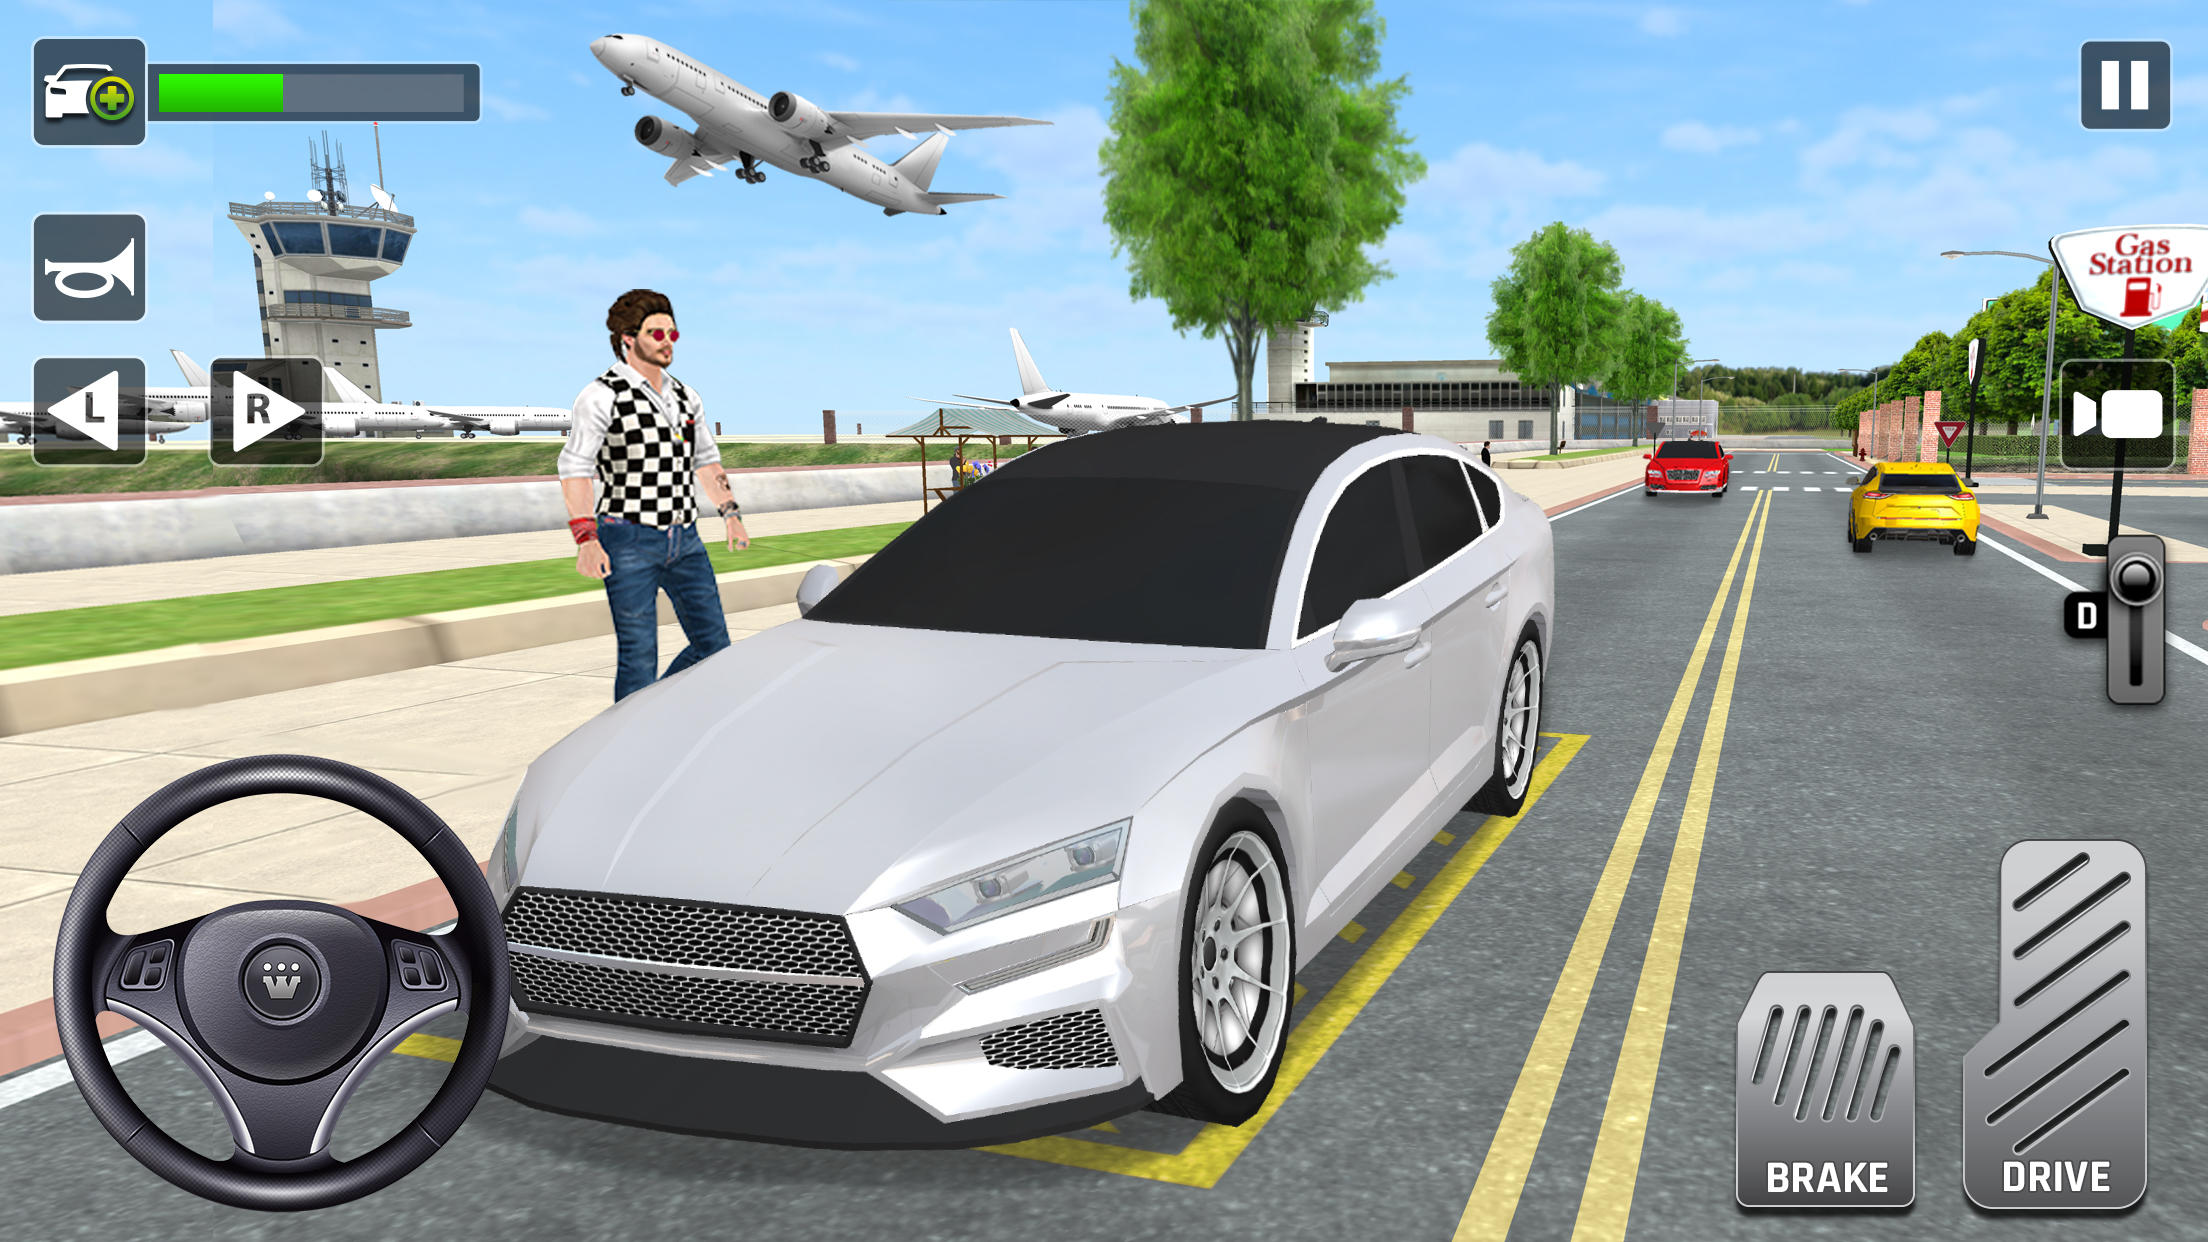 Screenshot 1 of 도심 택시 운전: 운전 시뮬레이터 게임 1.9